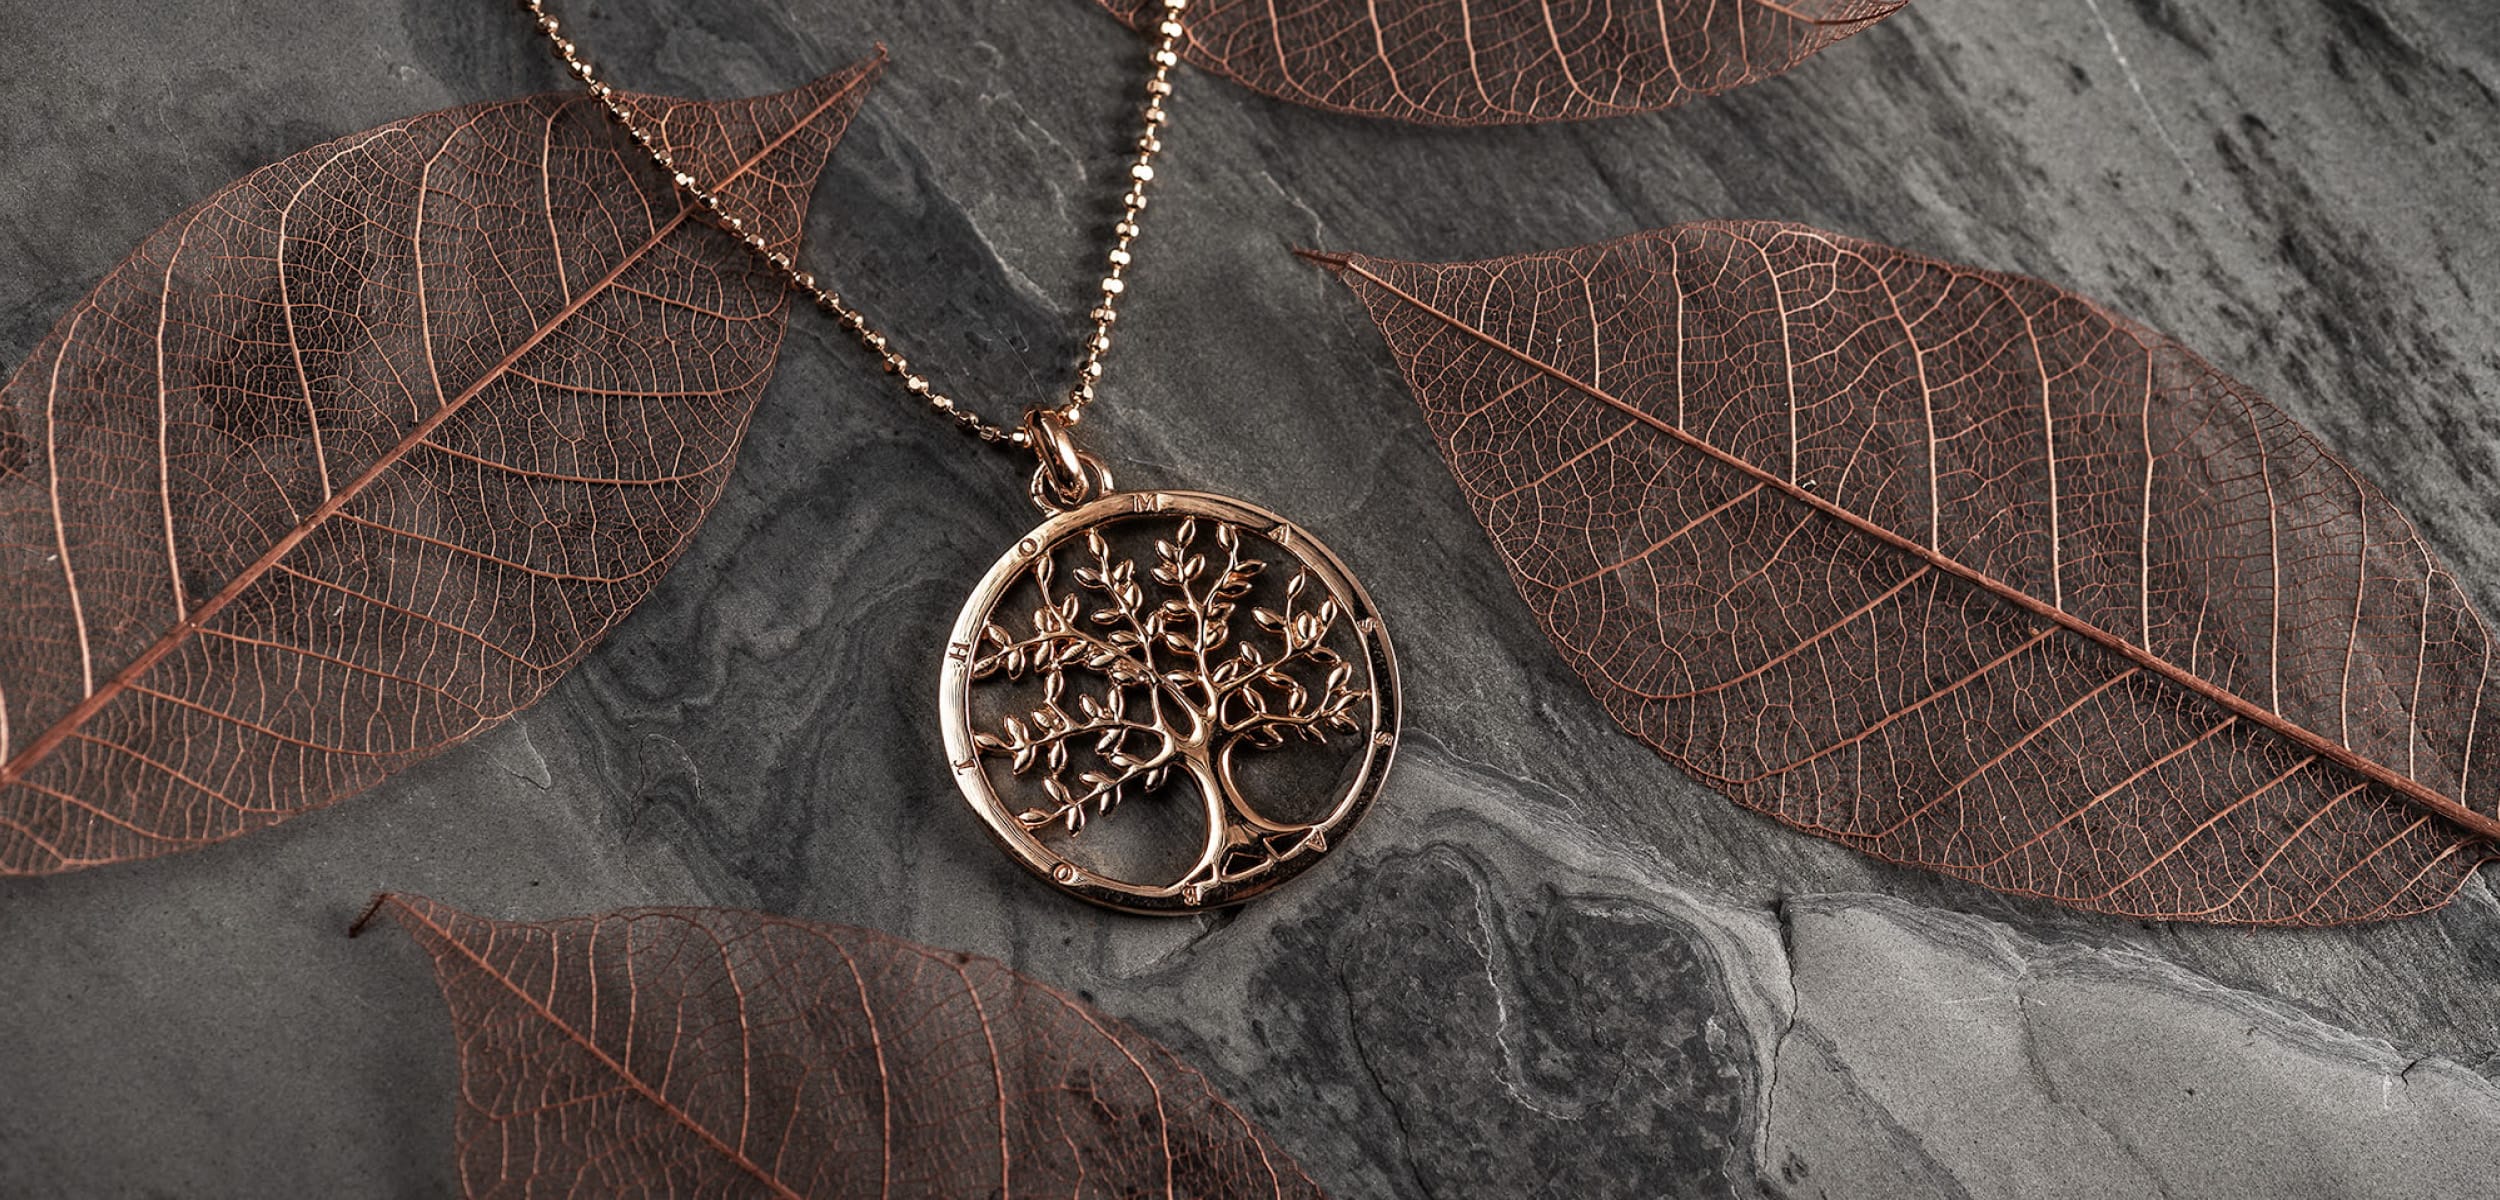 Introducing Silver Tree Jewellery